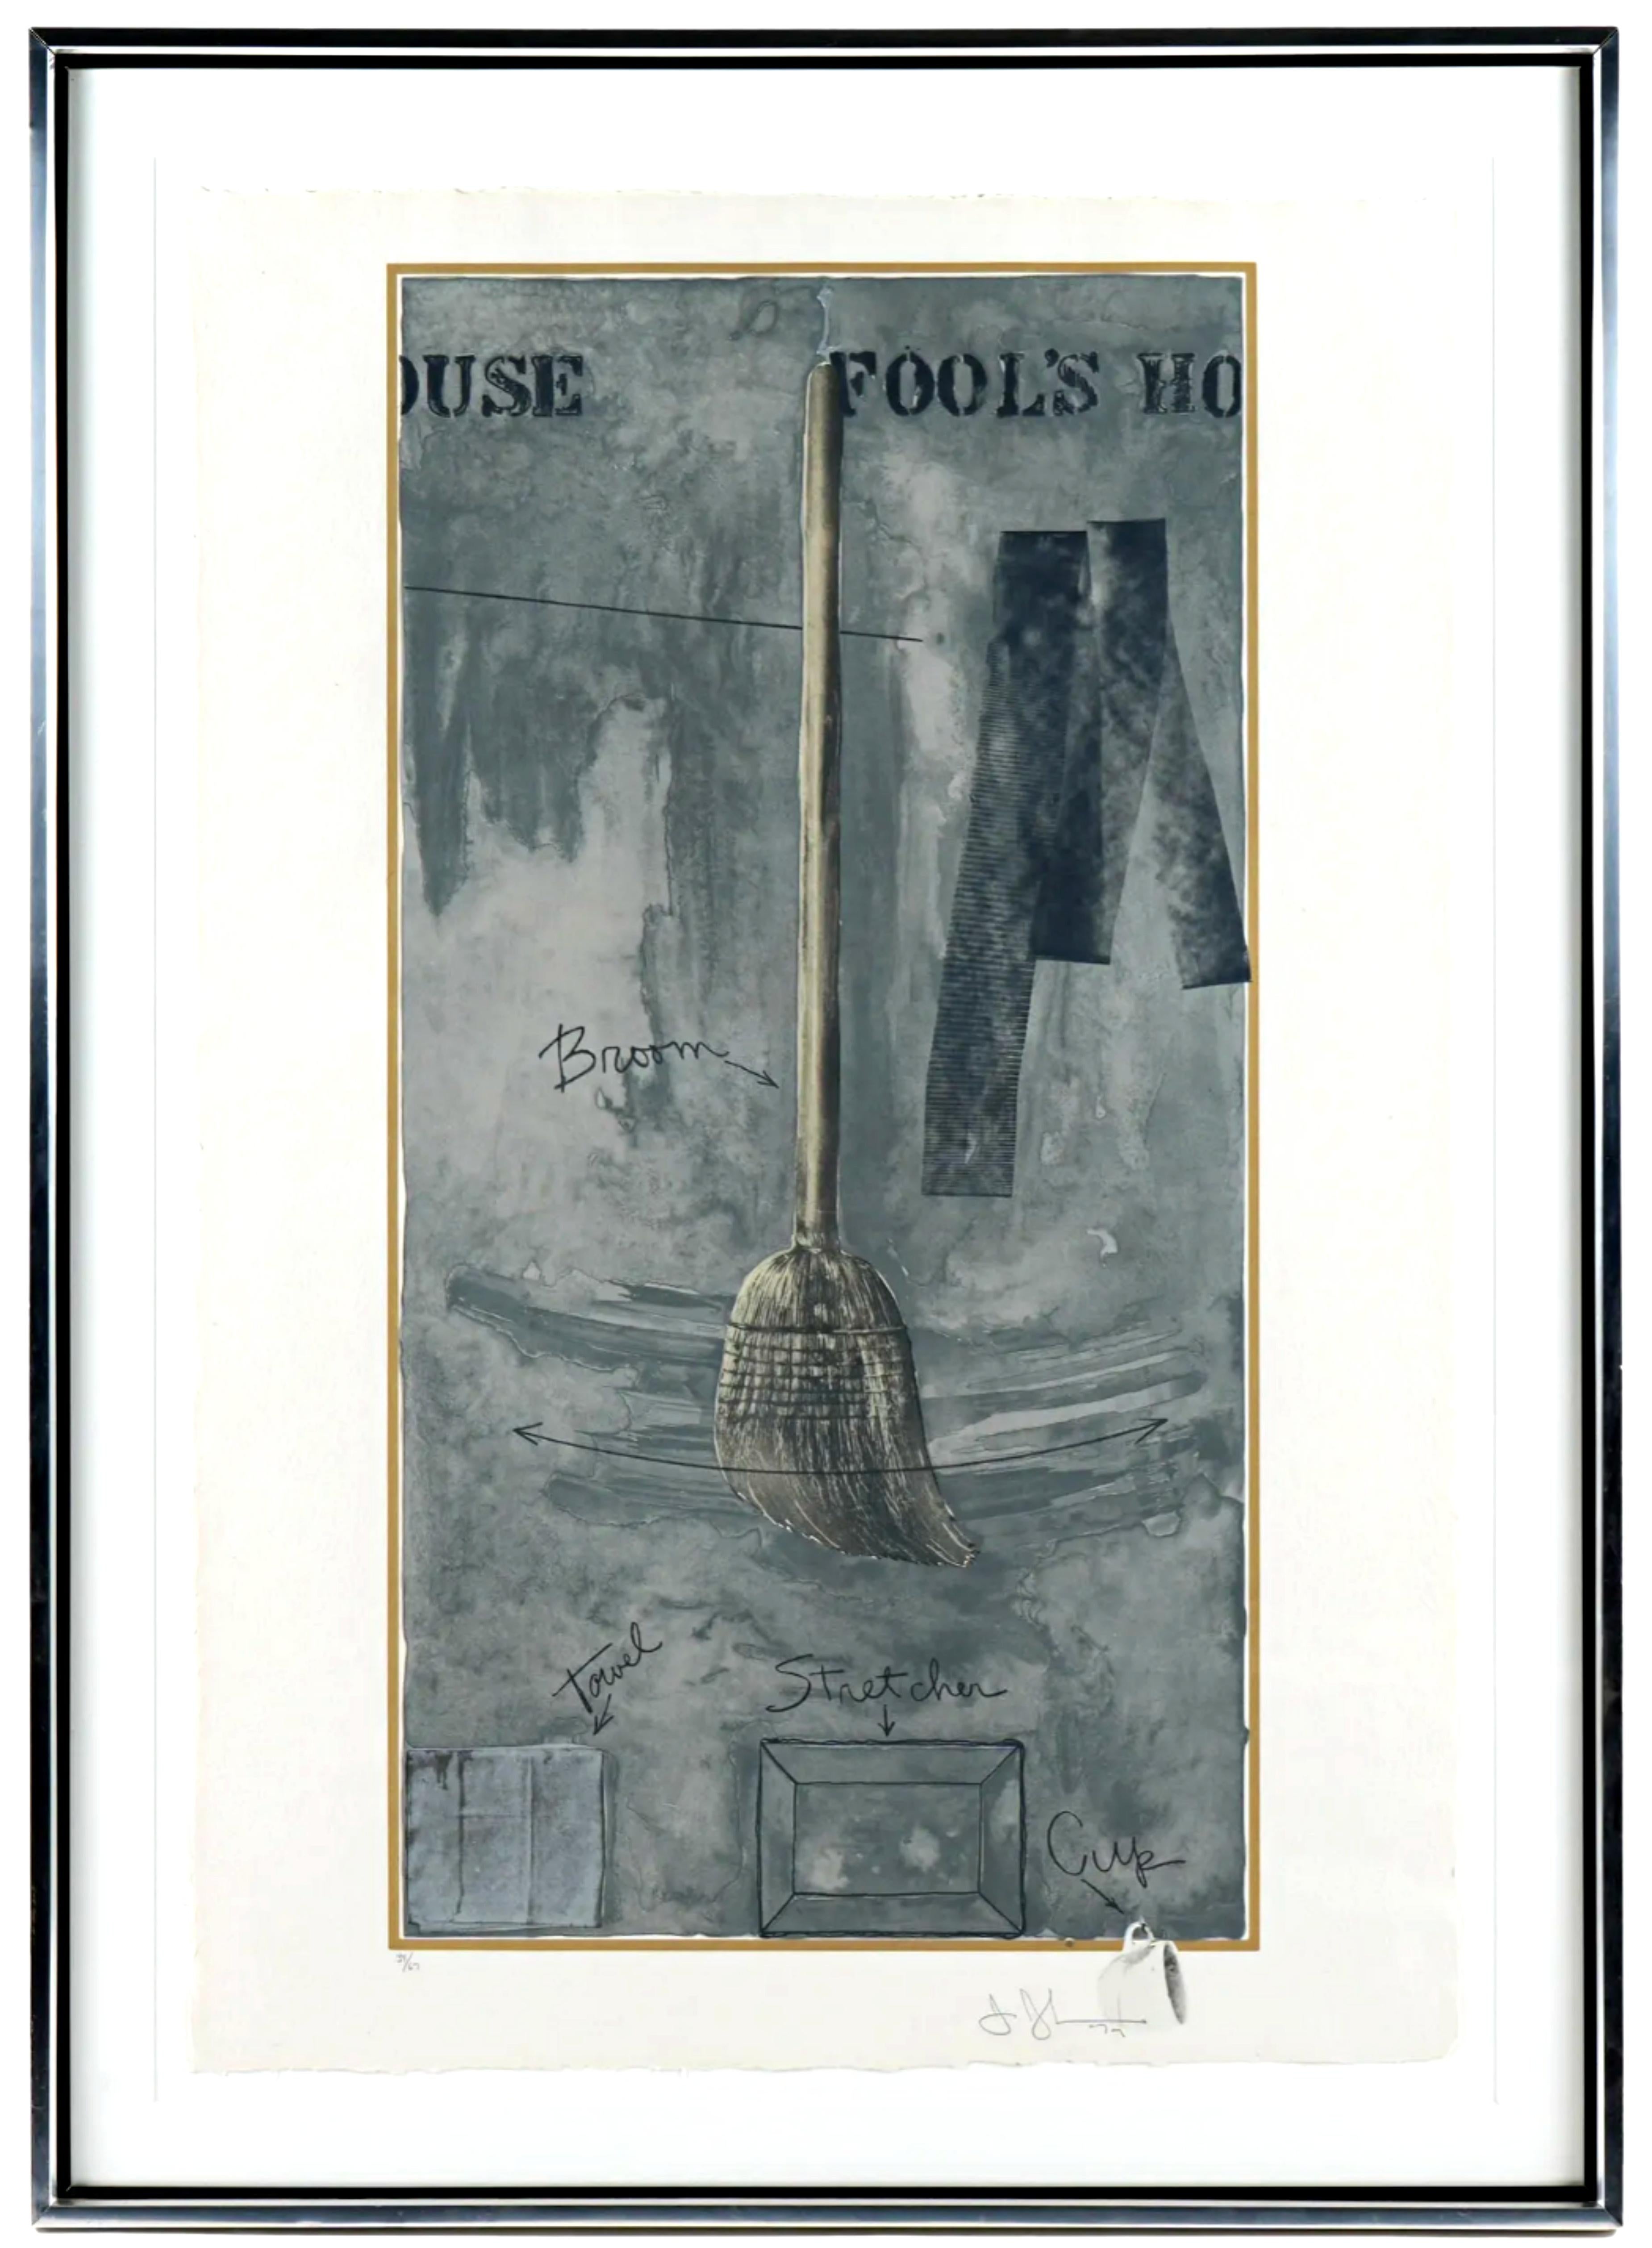 Jasper Johns Figurative Print - Fool's House 